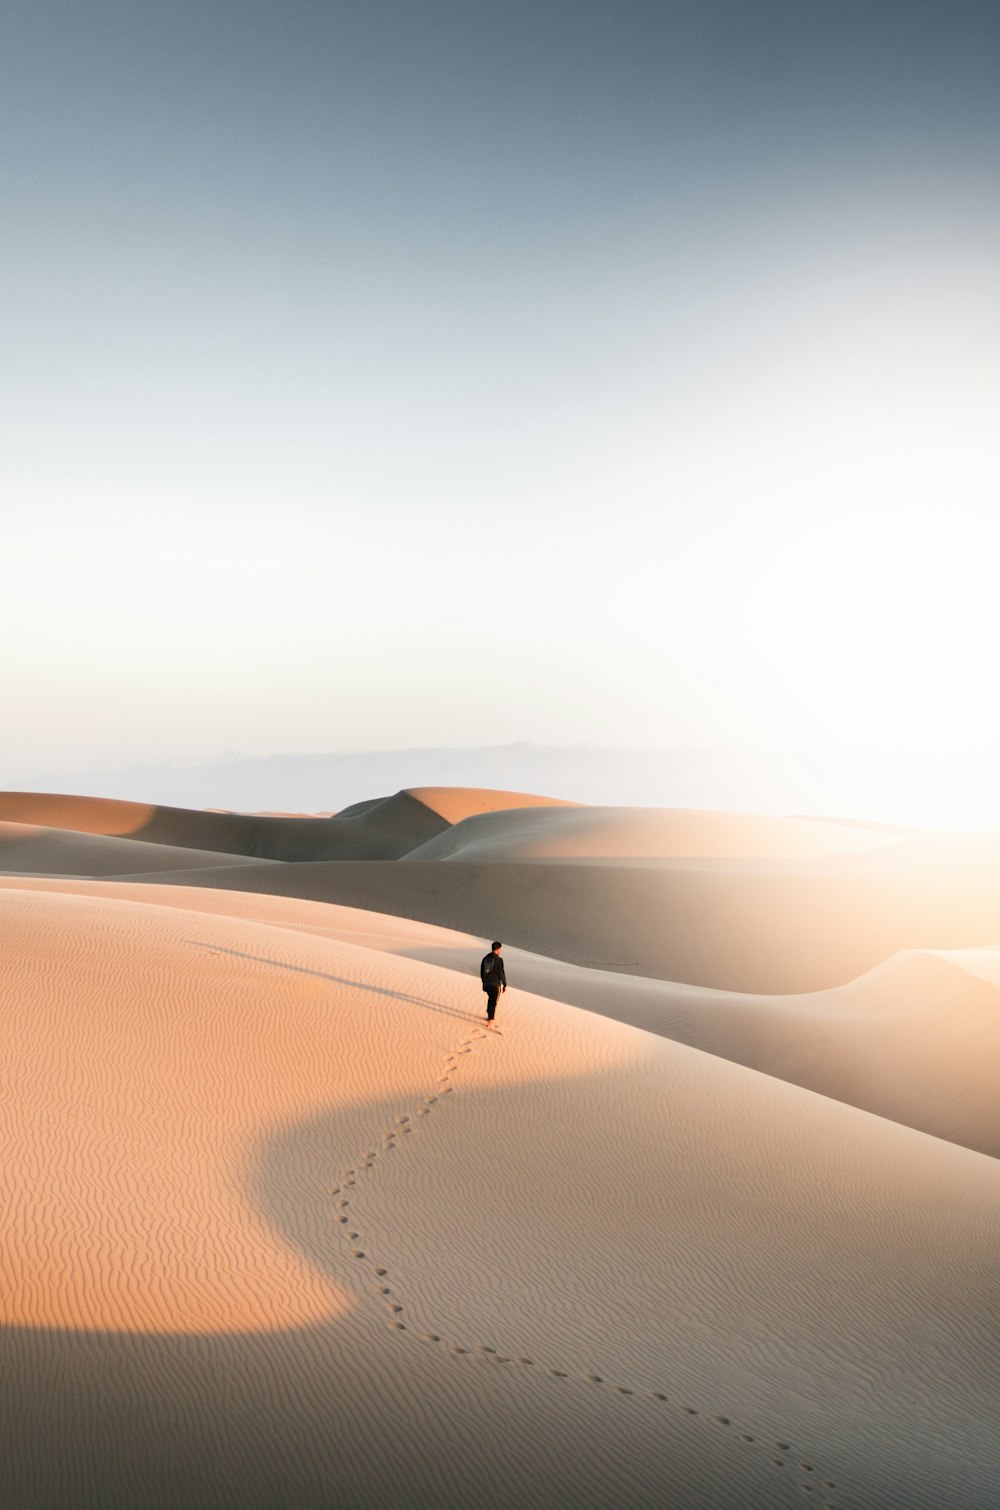 a lone person walking across a sandy desert